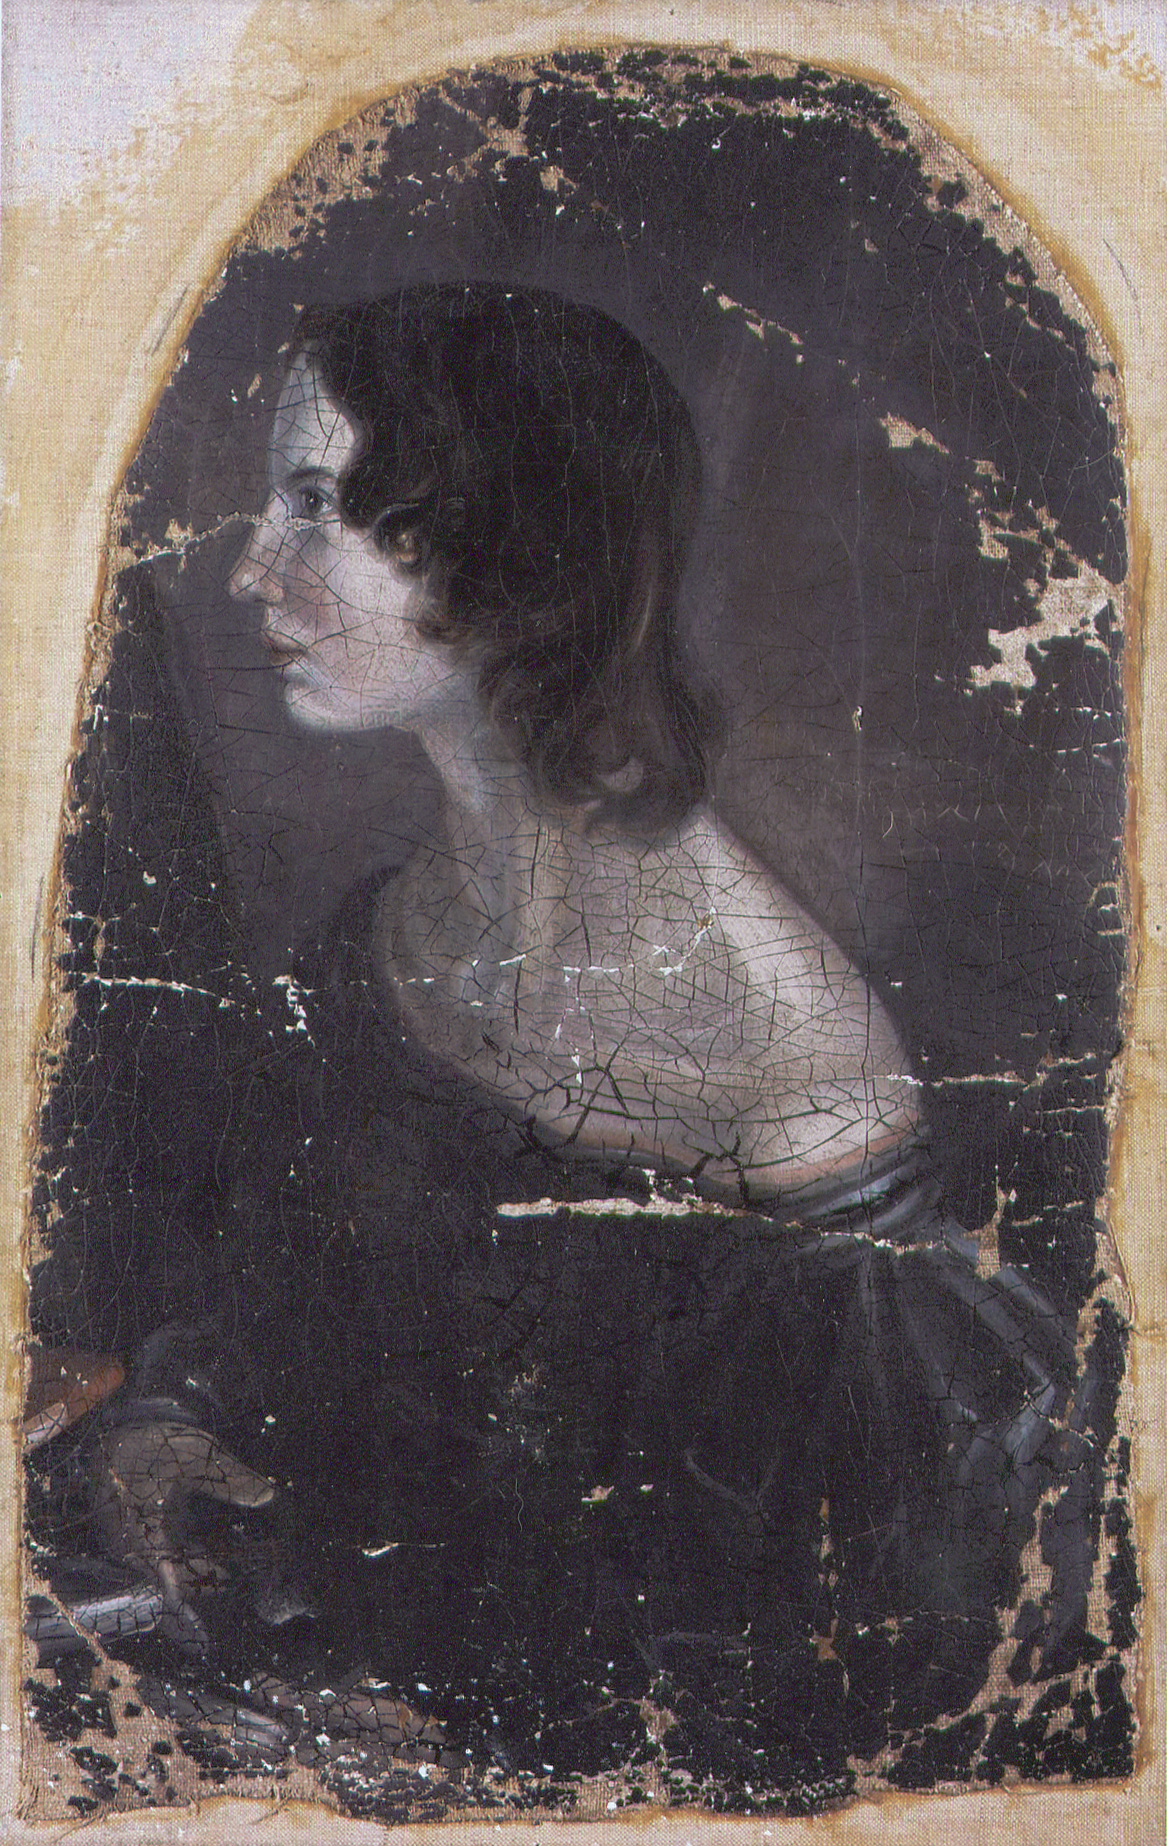 Anne Brontë, la feminista olvidada - purgante